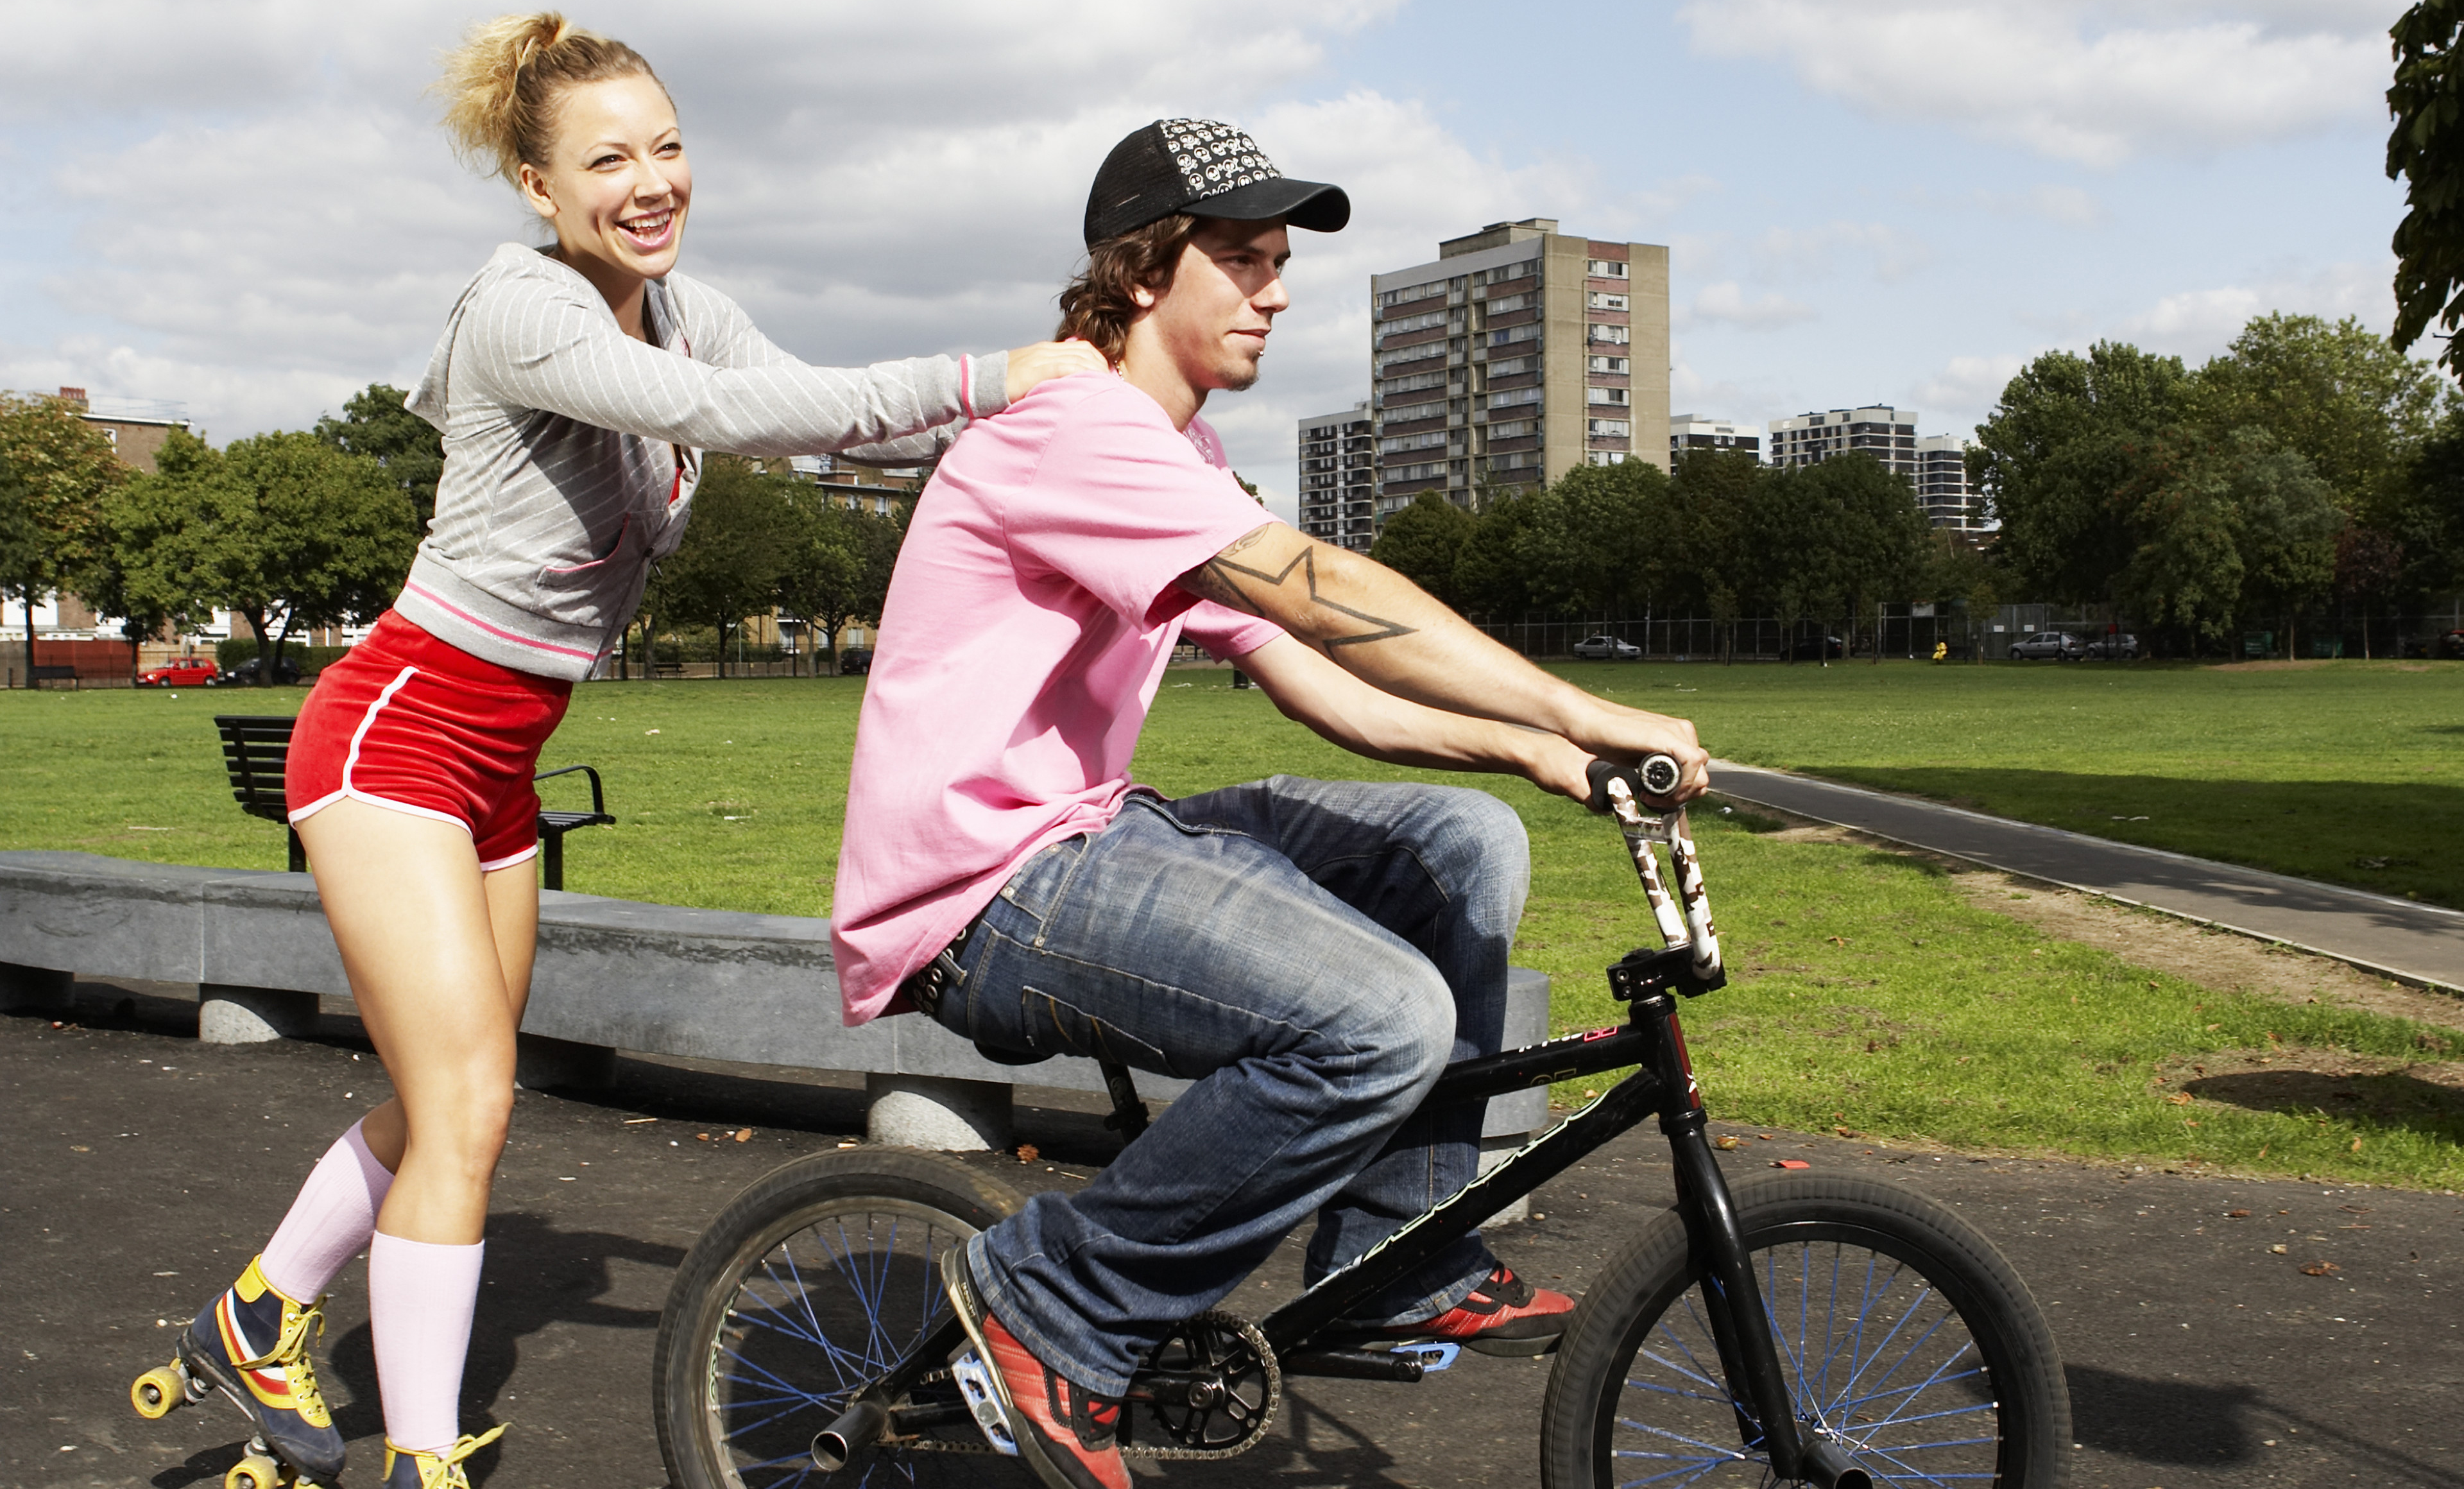 Skate bike. Велосипед самокат ролики. Катание на велосипеде. Подросток на велосипеде. Человек катается на велосипеде.